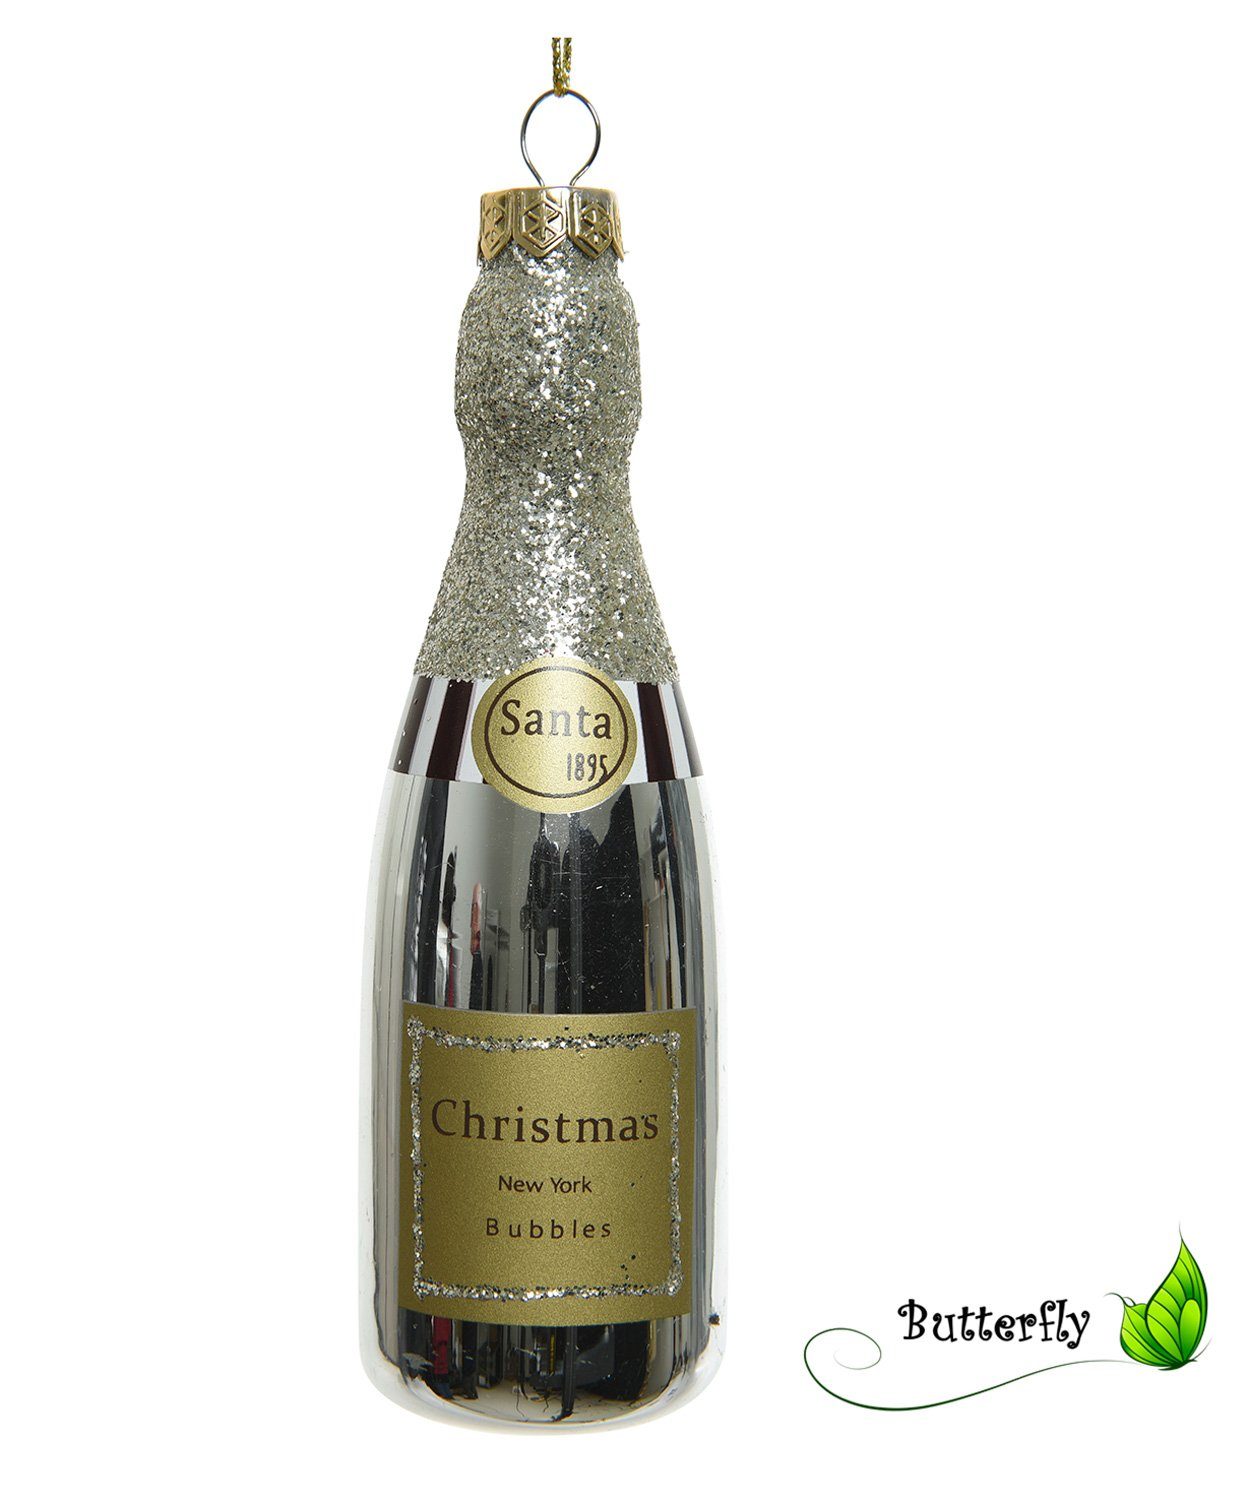 Decoris season decorations Christbaumschmuck, Christbaumschmuck Champagner Flasche Glas 12.5cm, 1 Stück